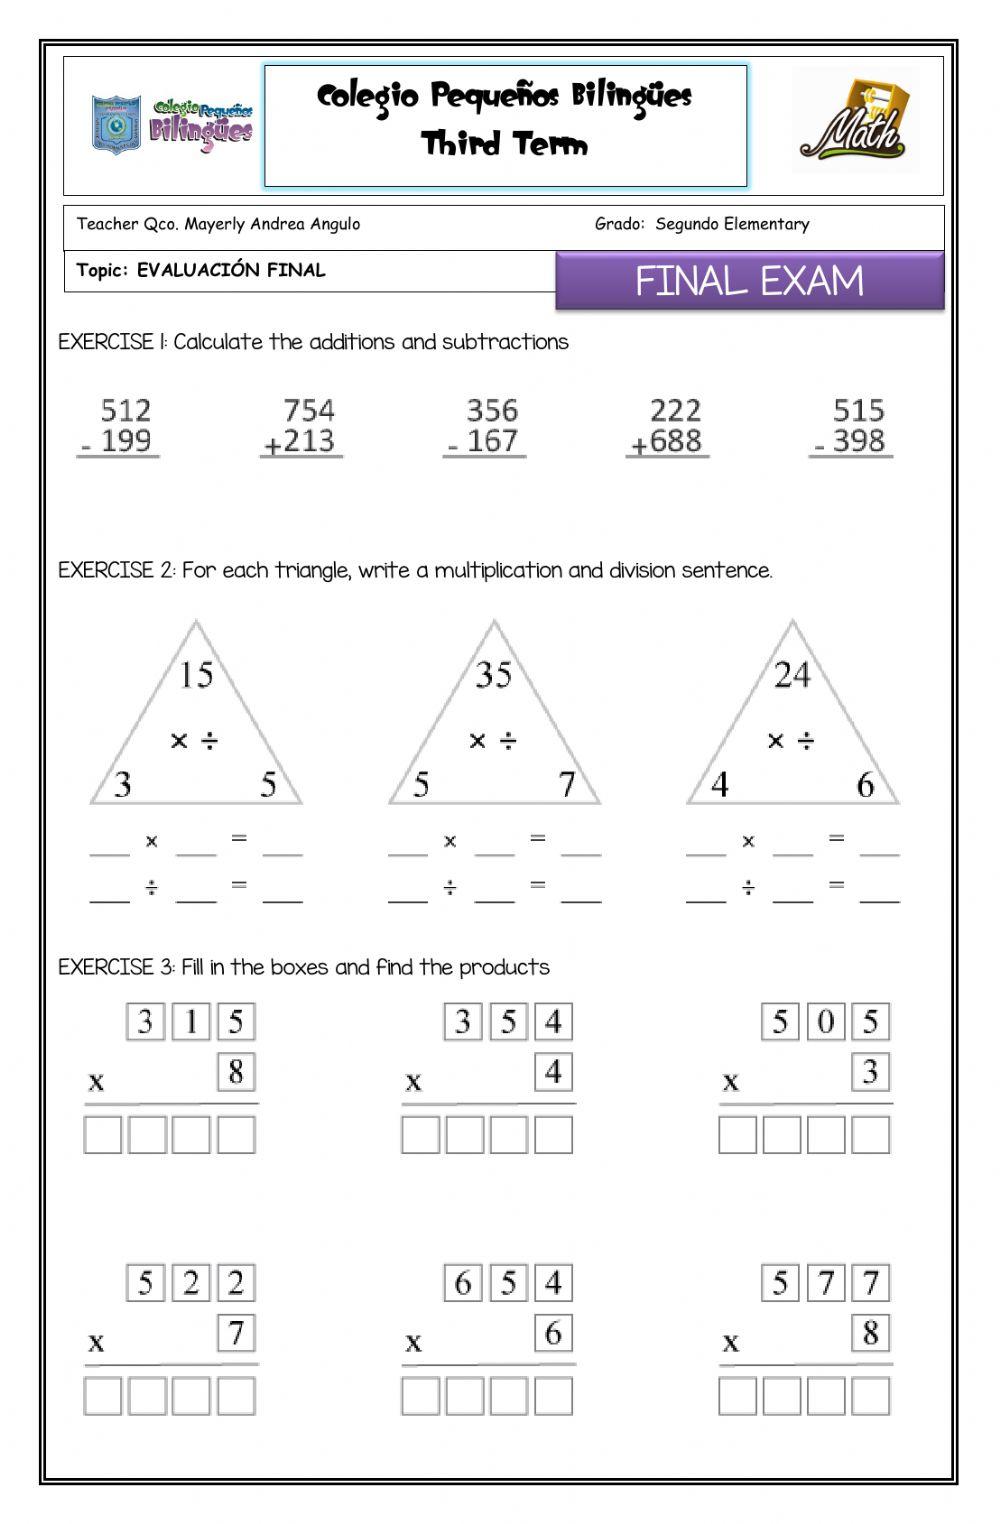 Final exam -third term-segundo elementary- math-2020